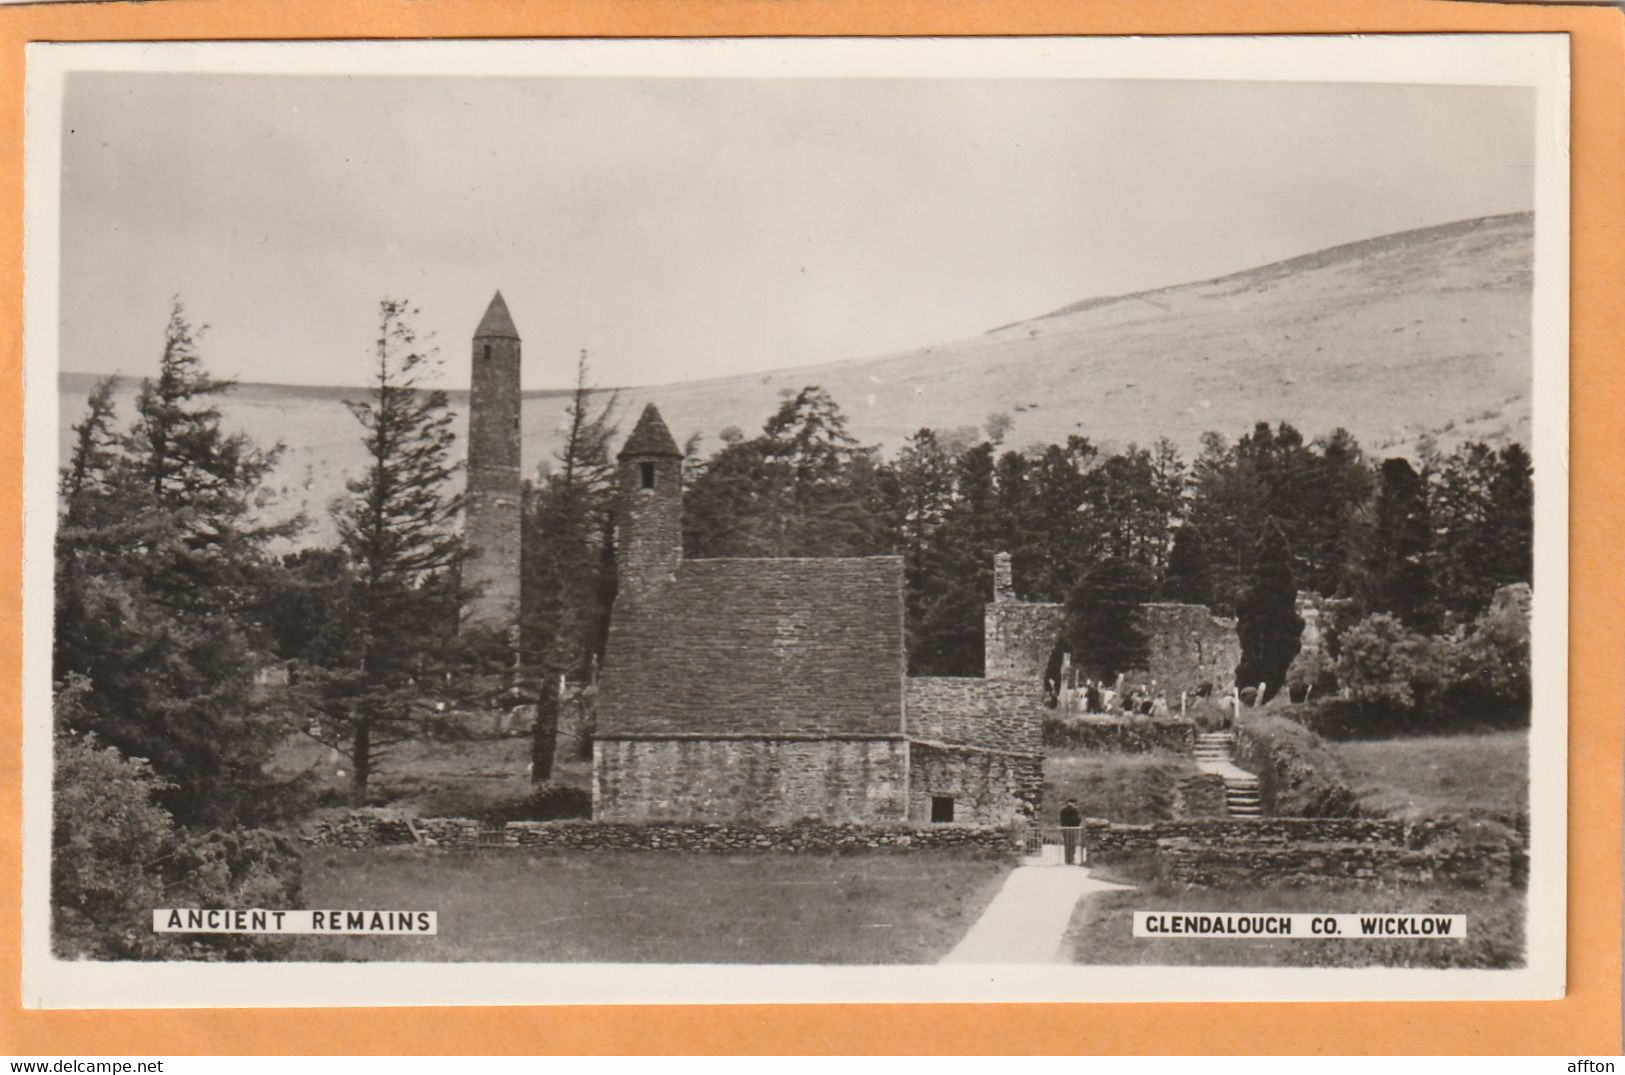 Glendalouch Co Wicklow Ireland Old Postcard - Wicklow